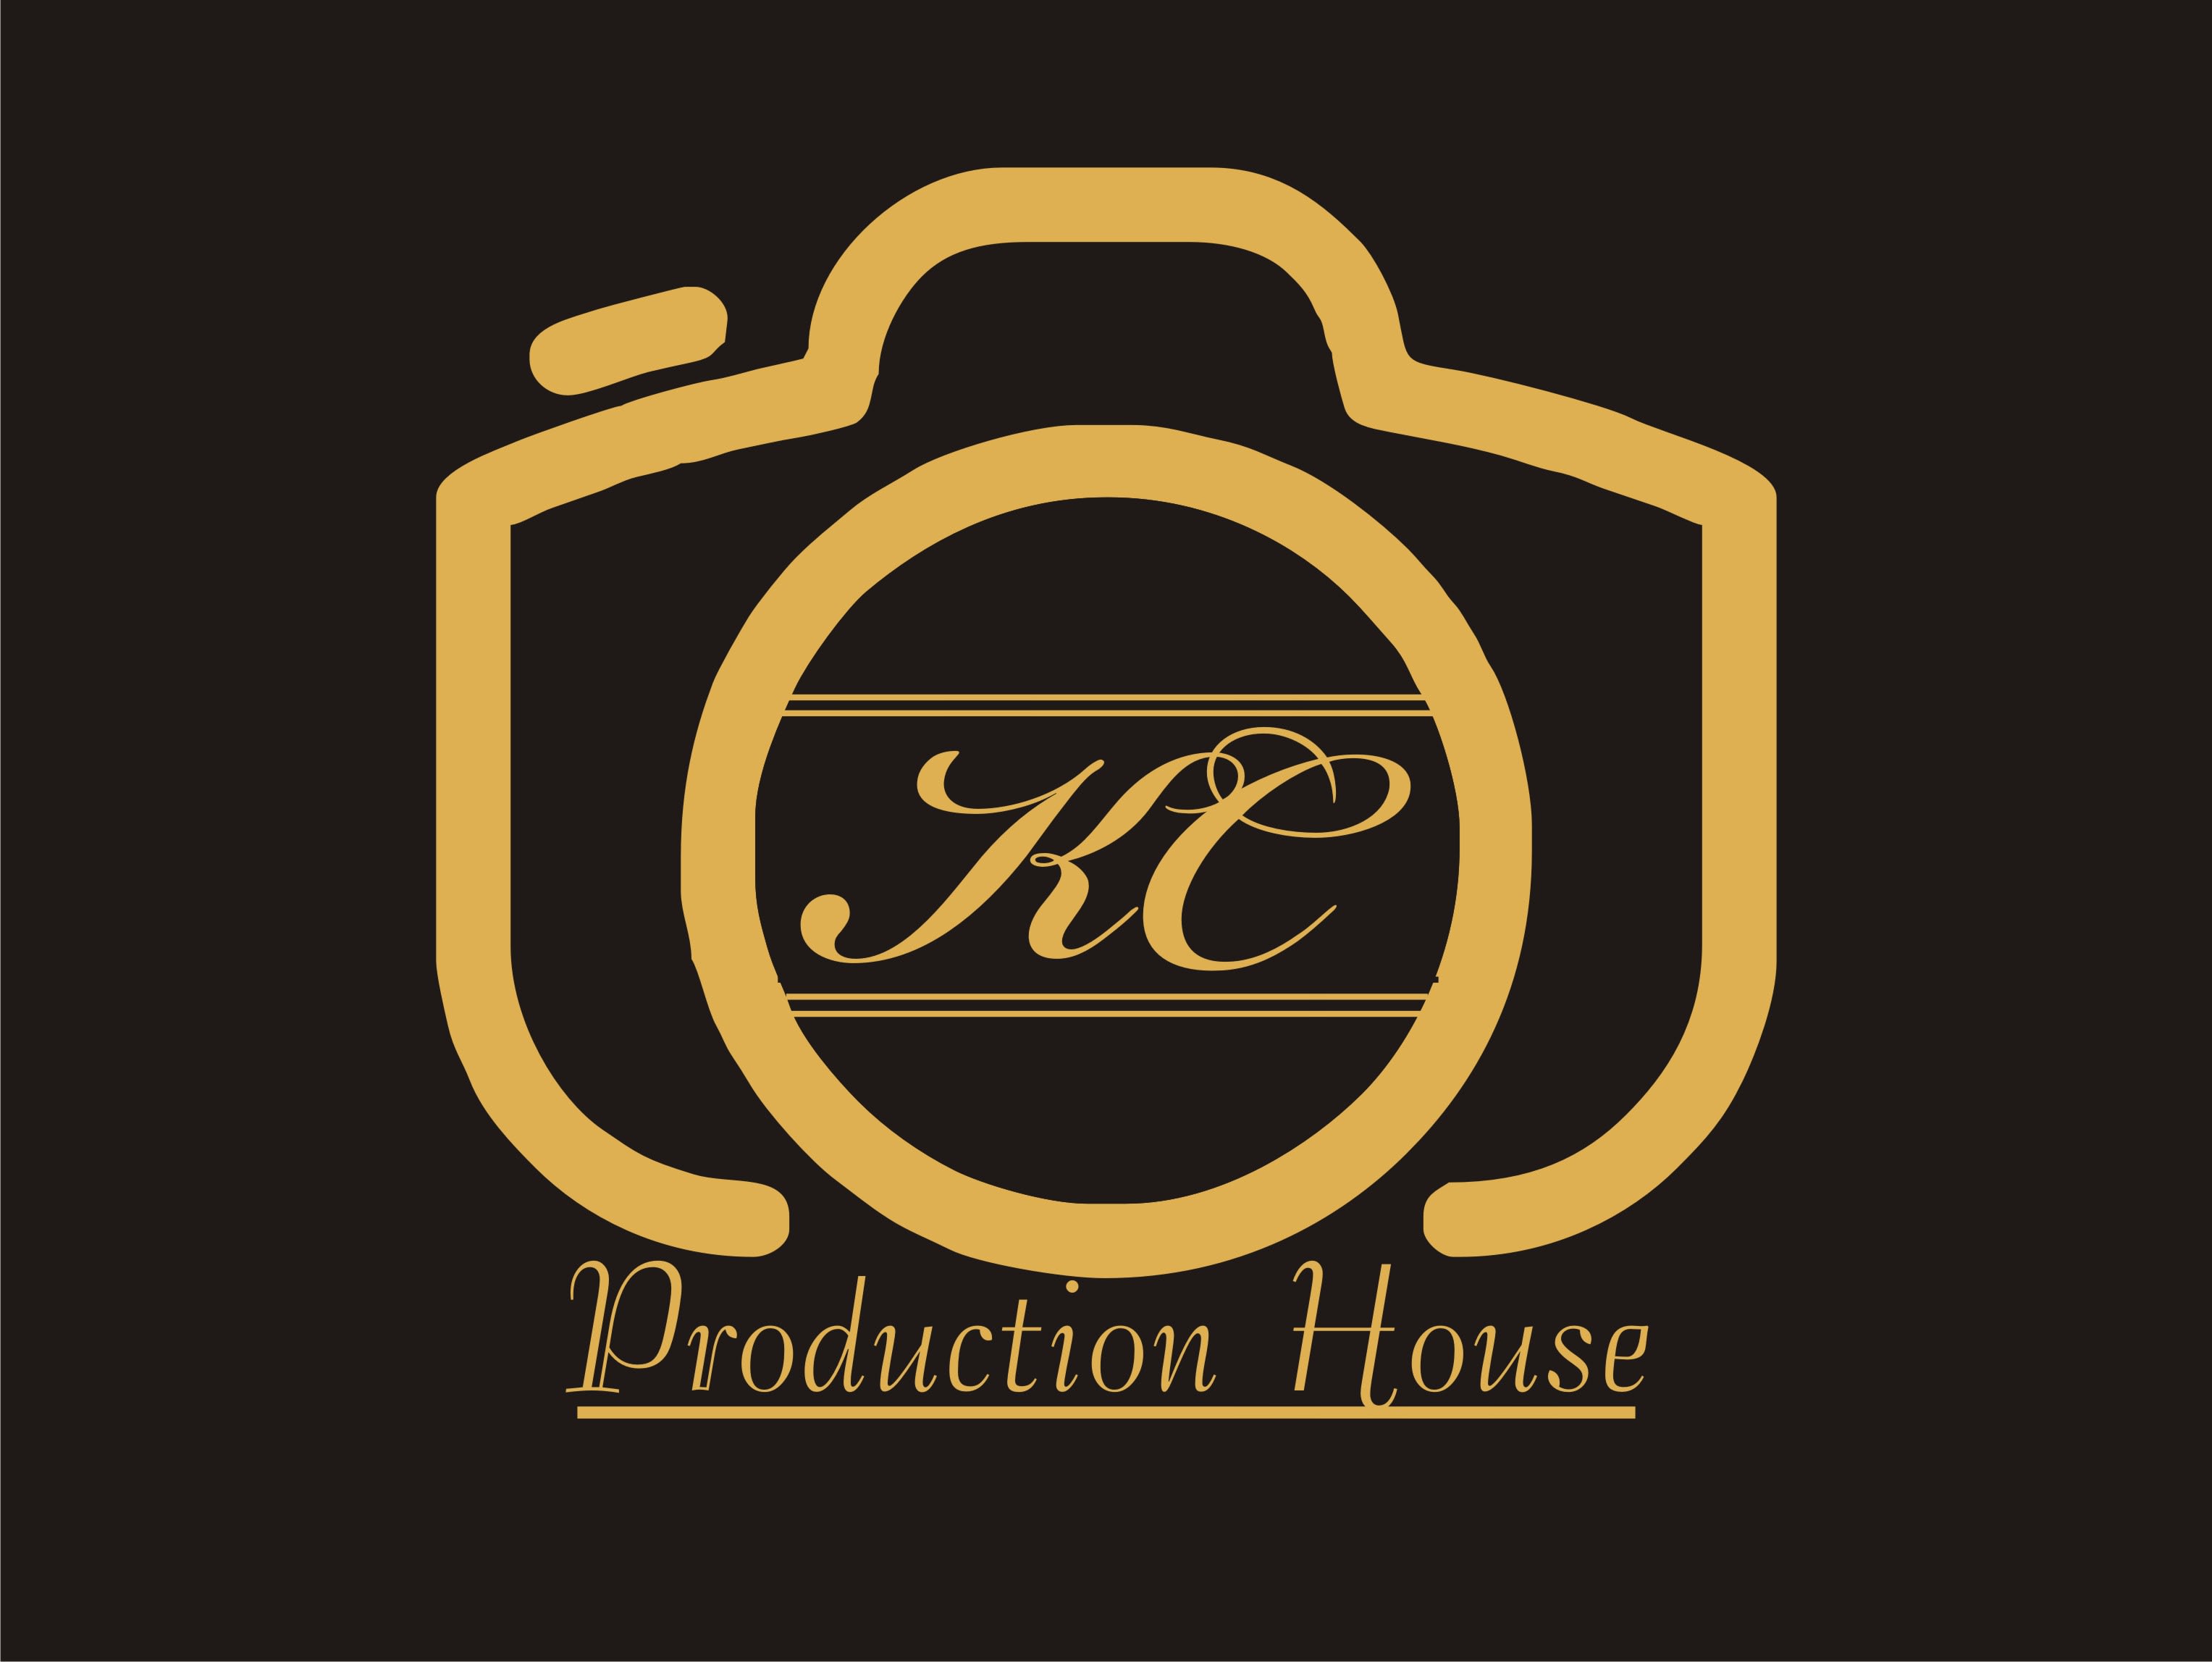 K C Productions House